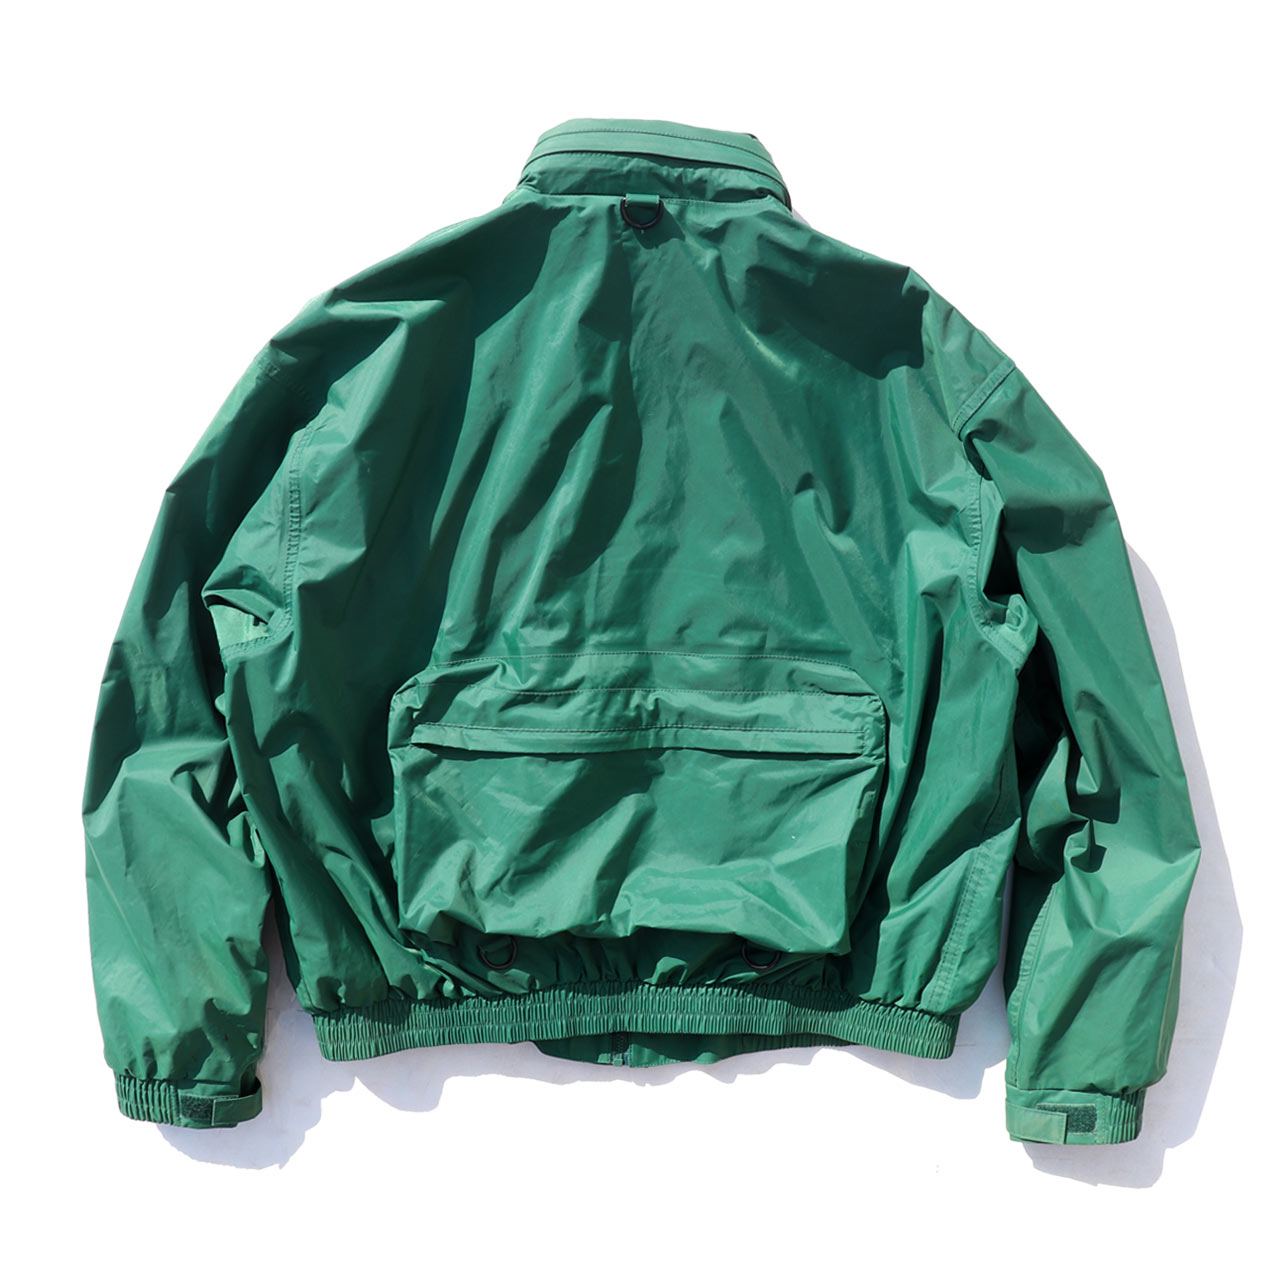 hodgman fishing jacket - Gem